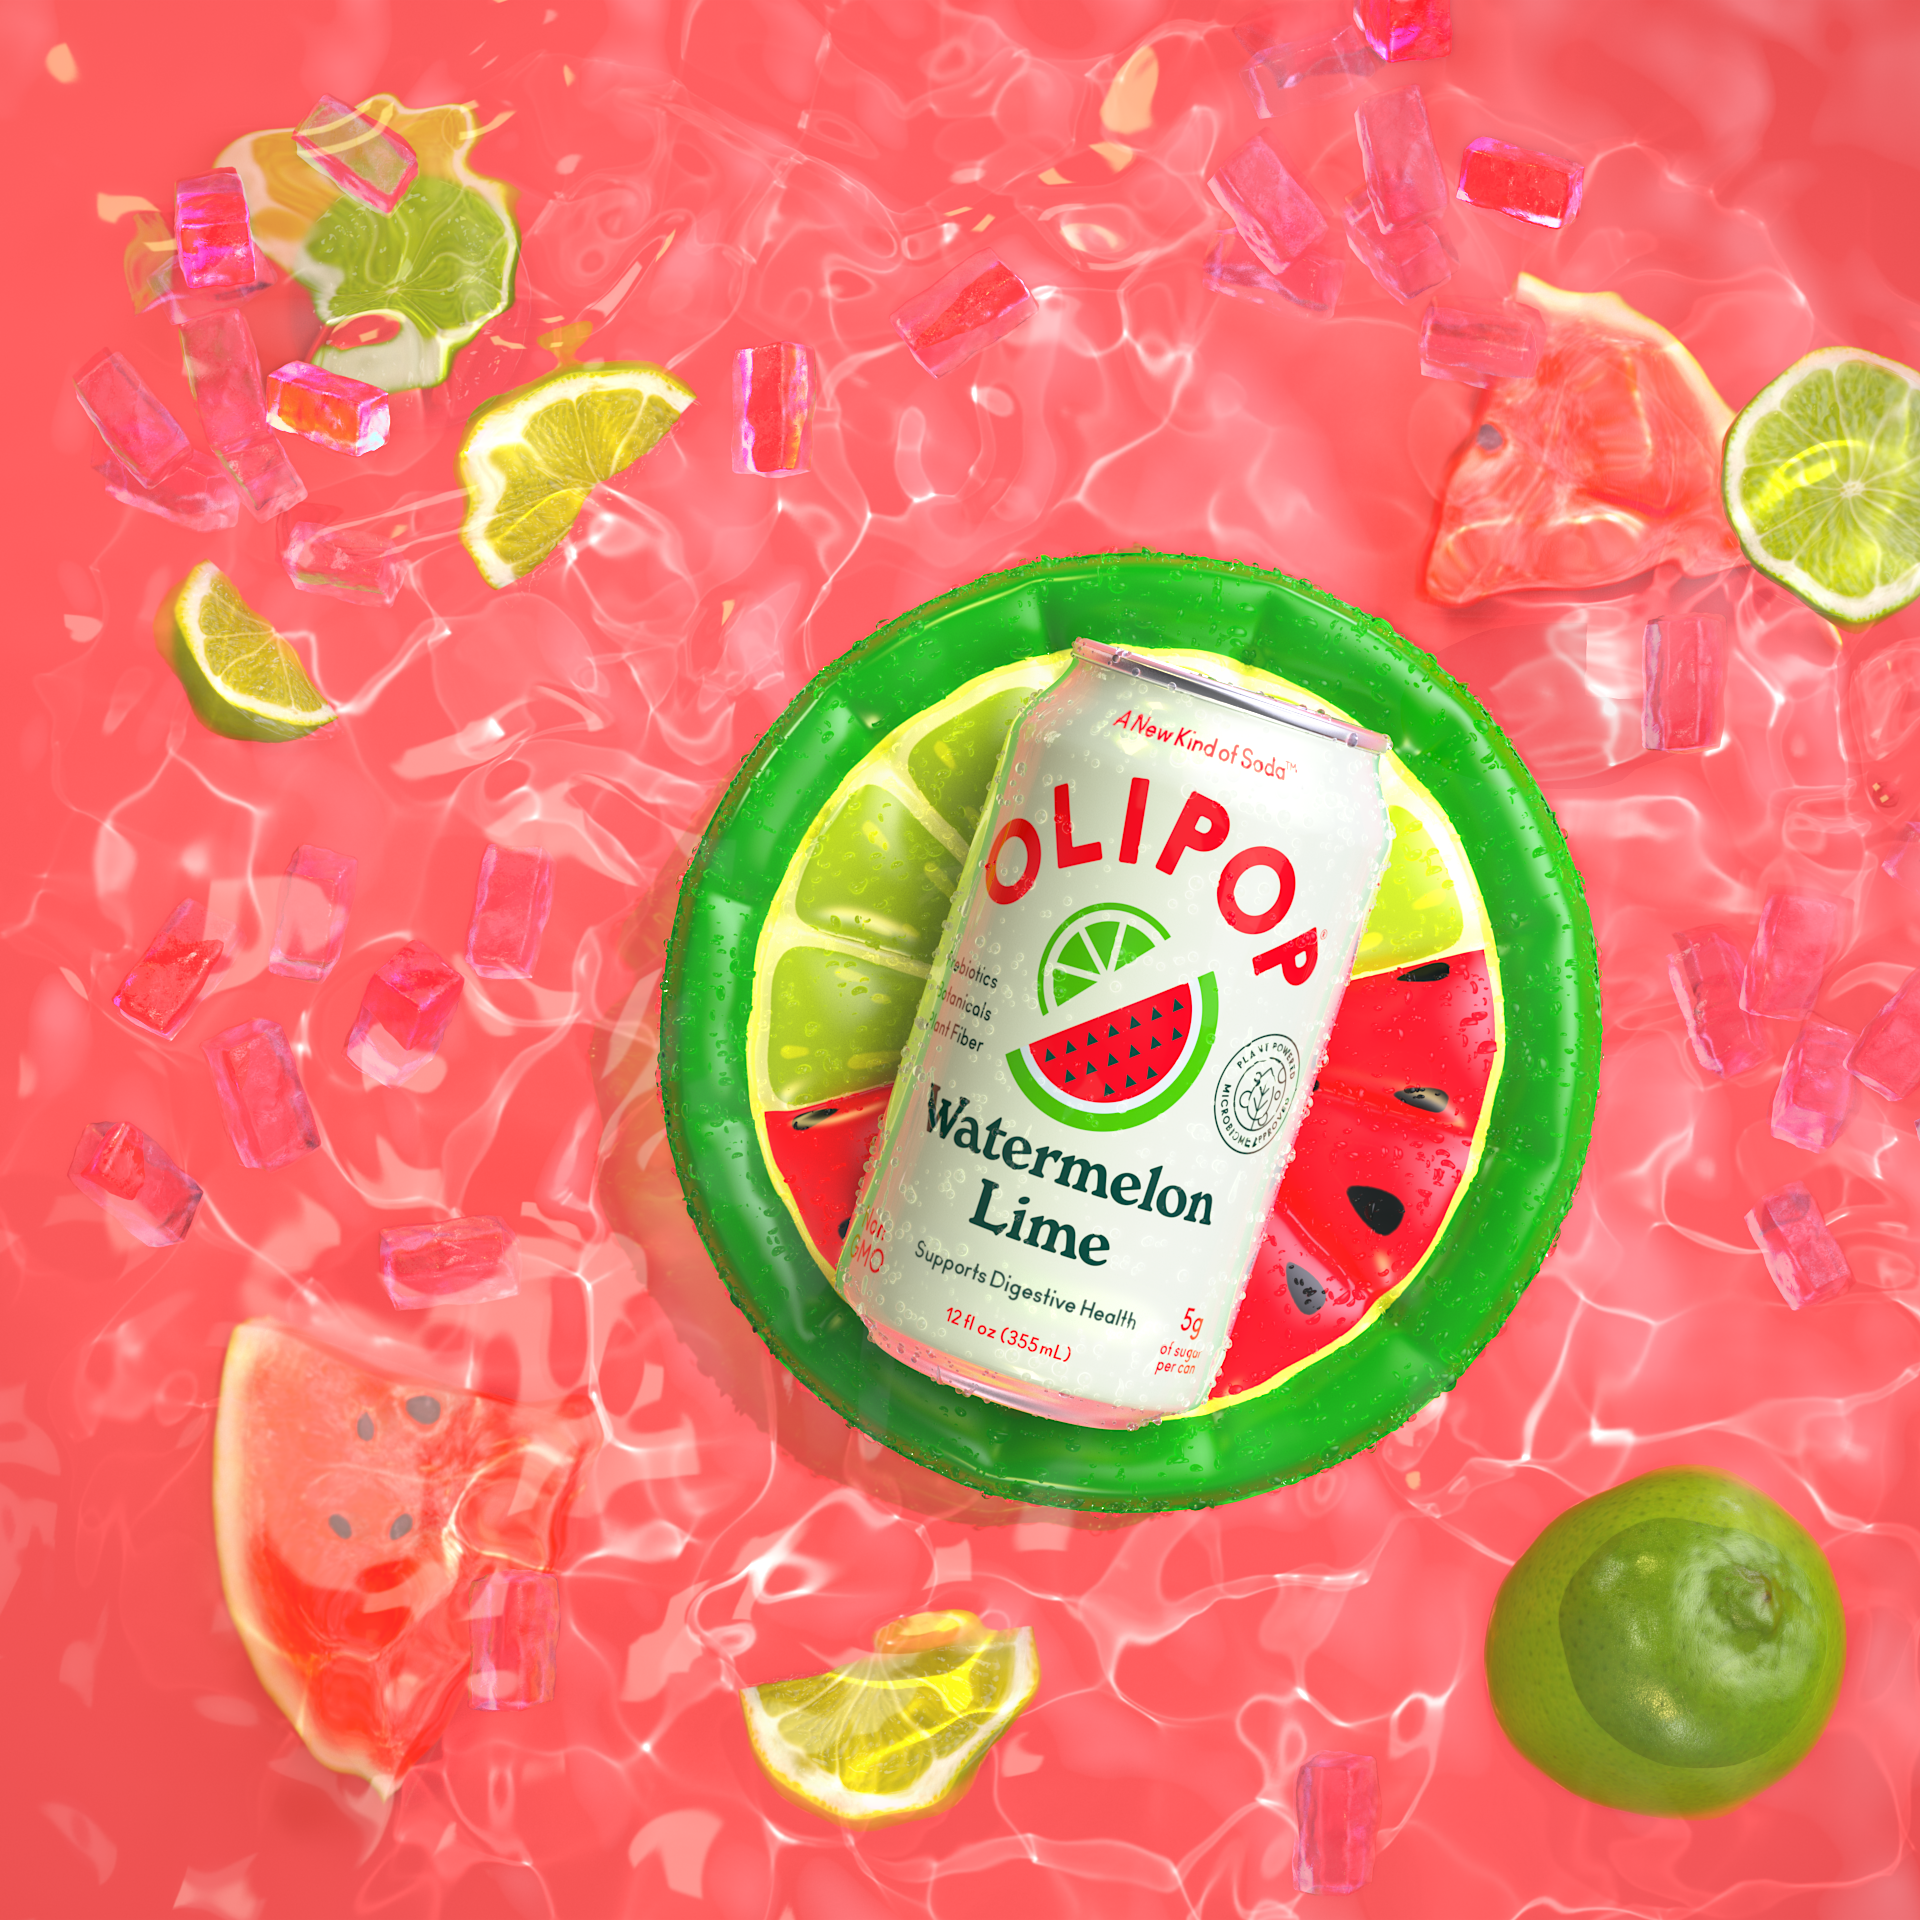 new olipop flavor watermelon lime